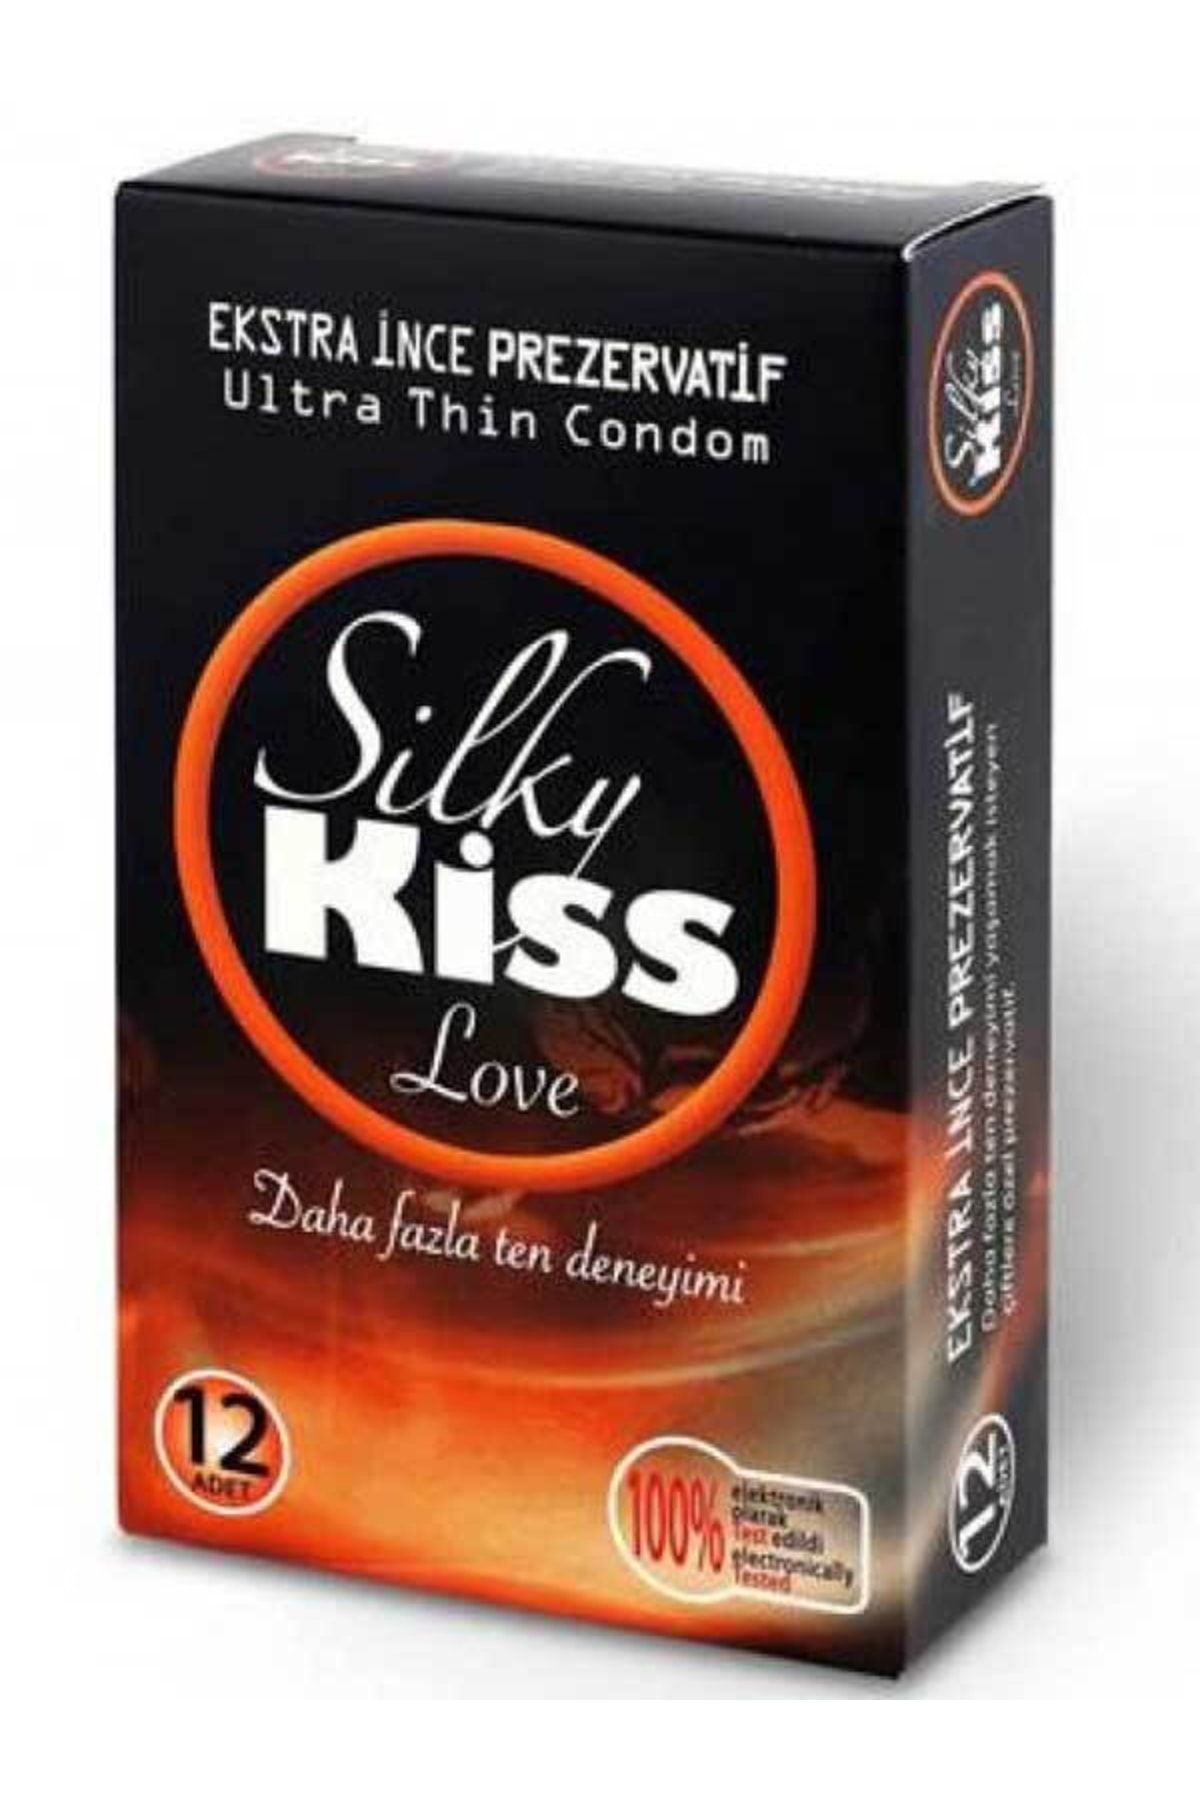 Silky Kiss River World Prezervatif 12'li Ekstra Ince